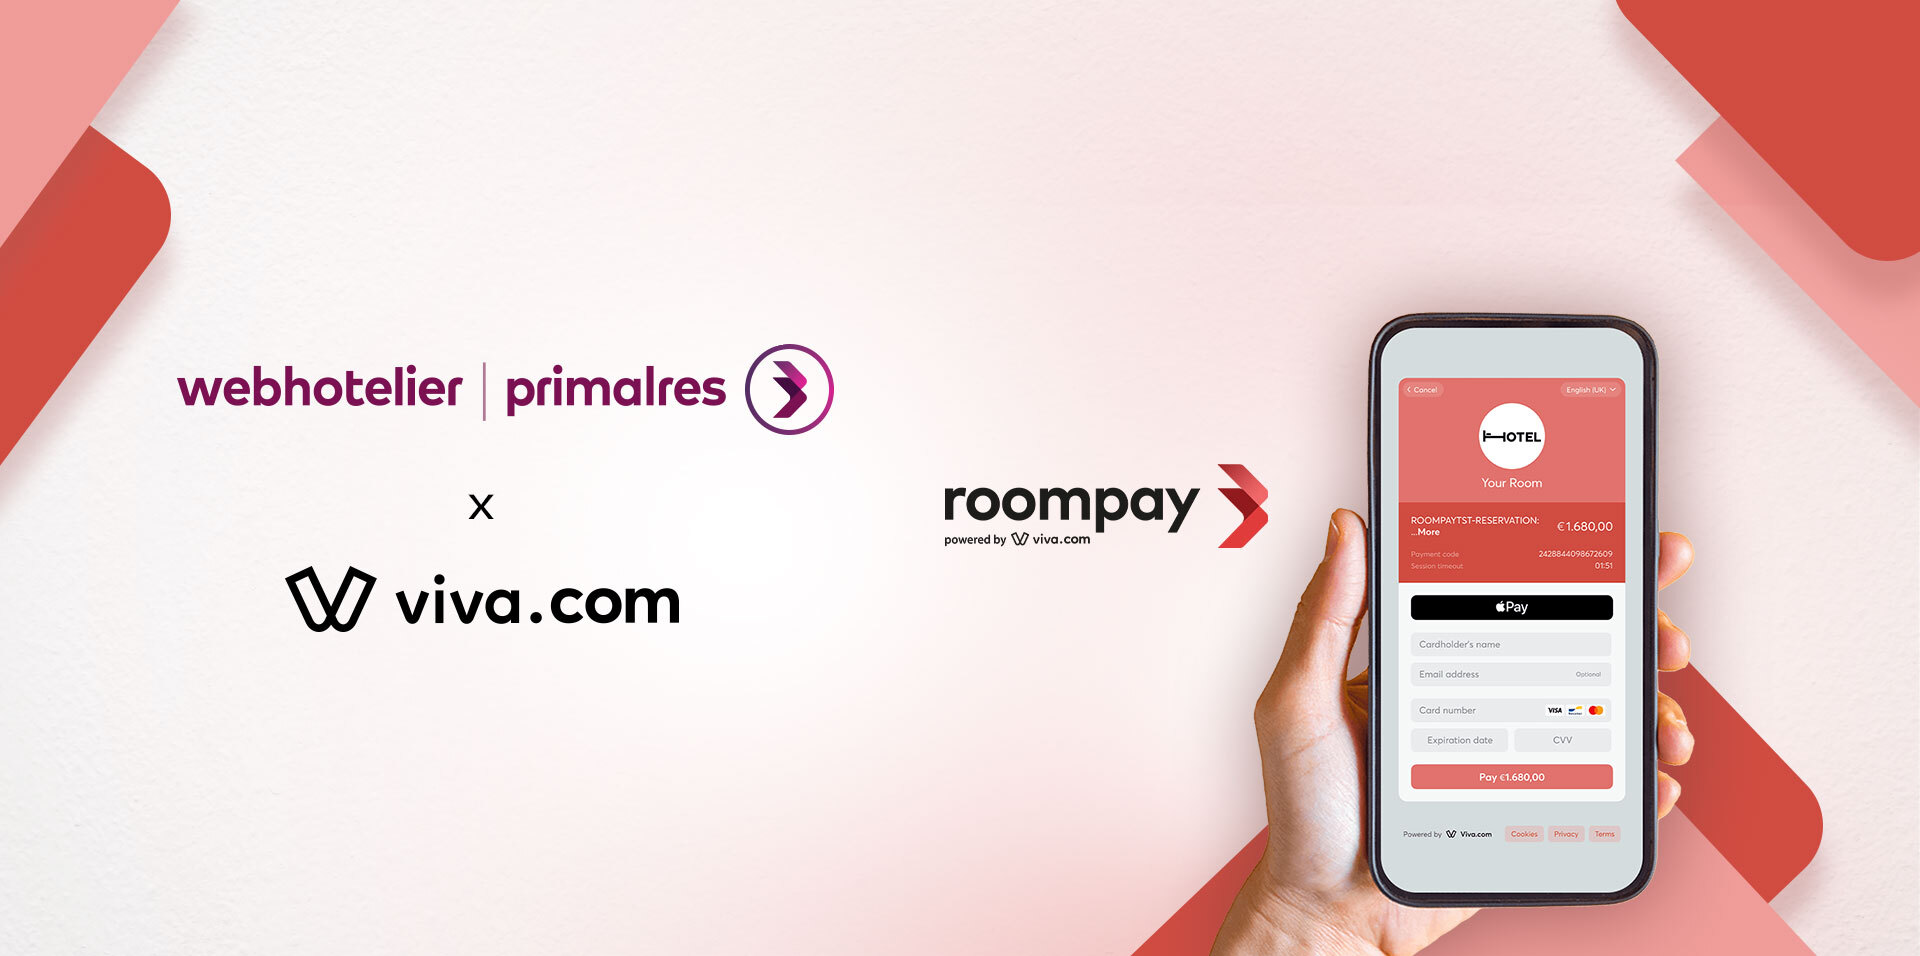 roompay, σύστημα διαχείρισης συναλλαγών και πληρωμών για ξενοδοχεία - Πηγή: webhotelier | primalres